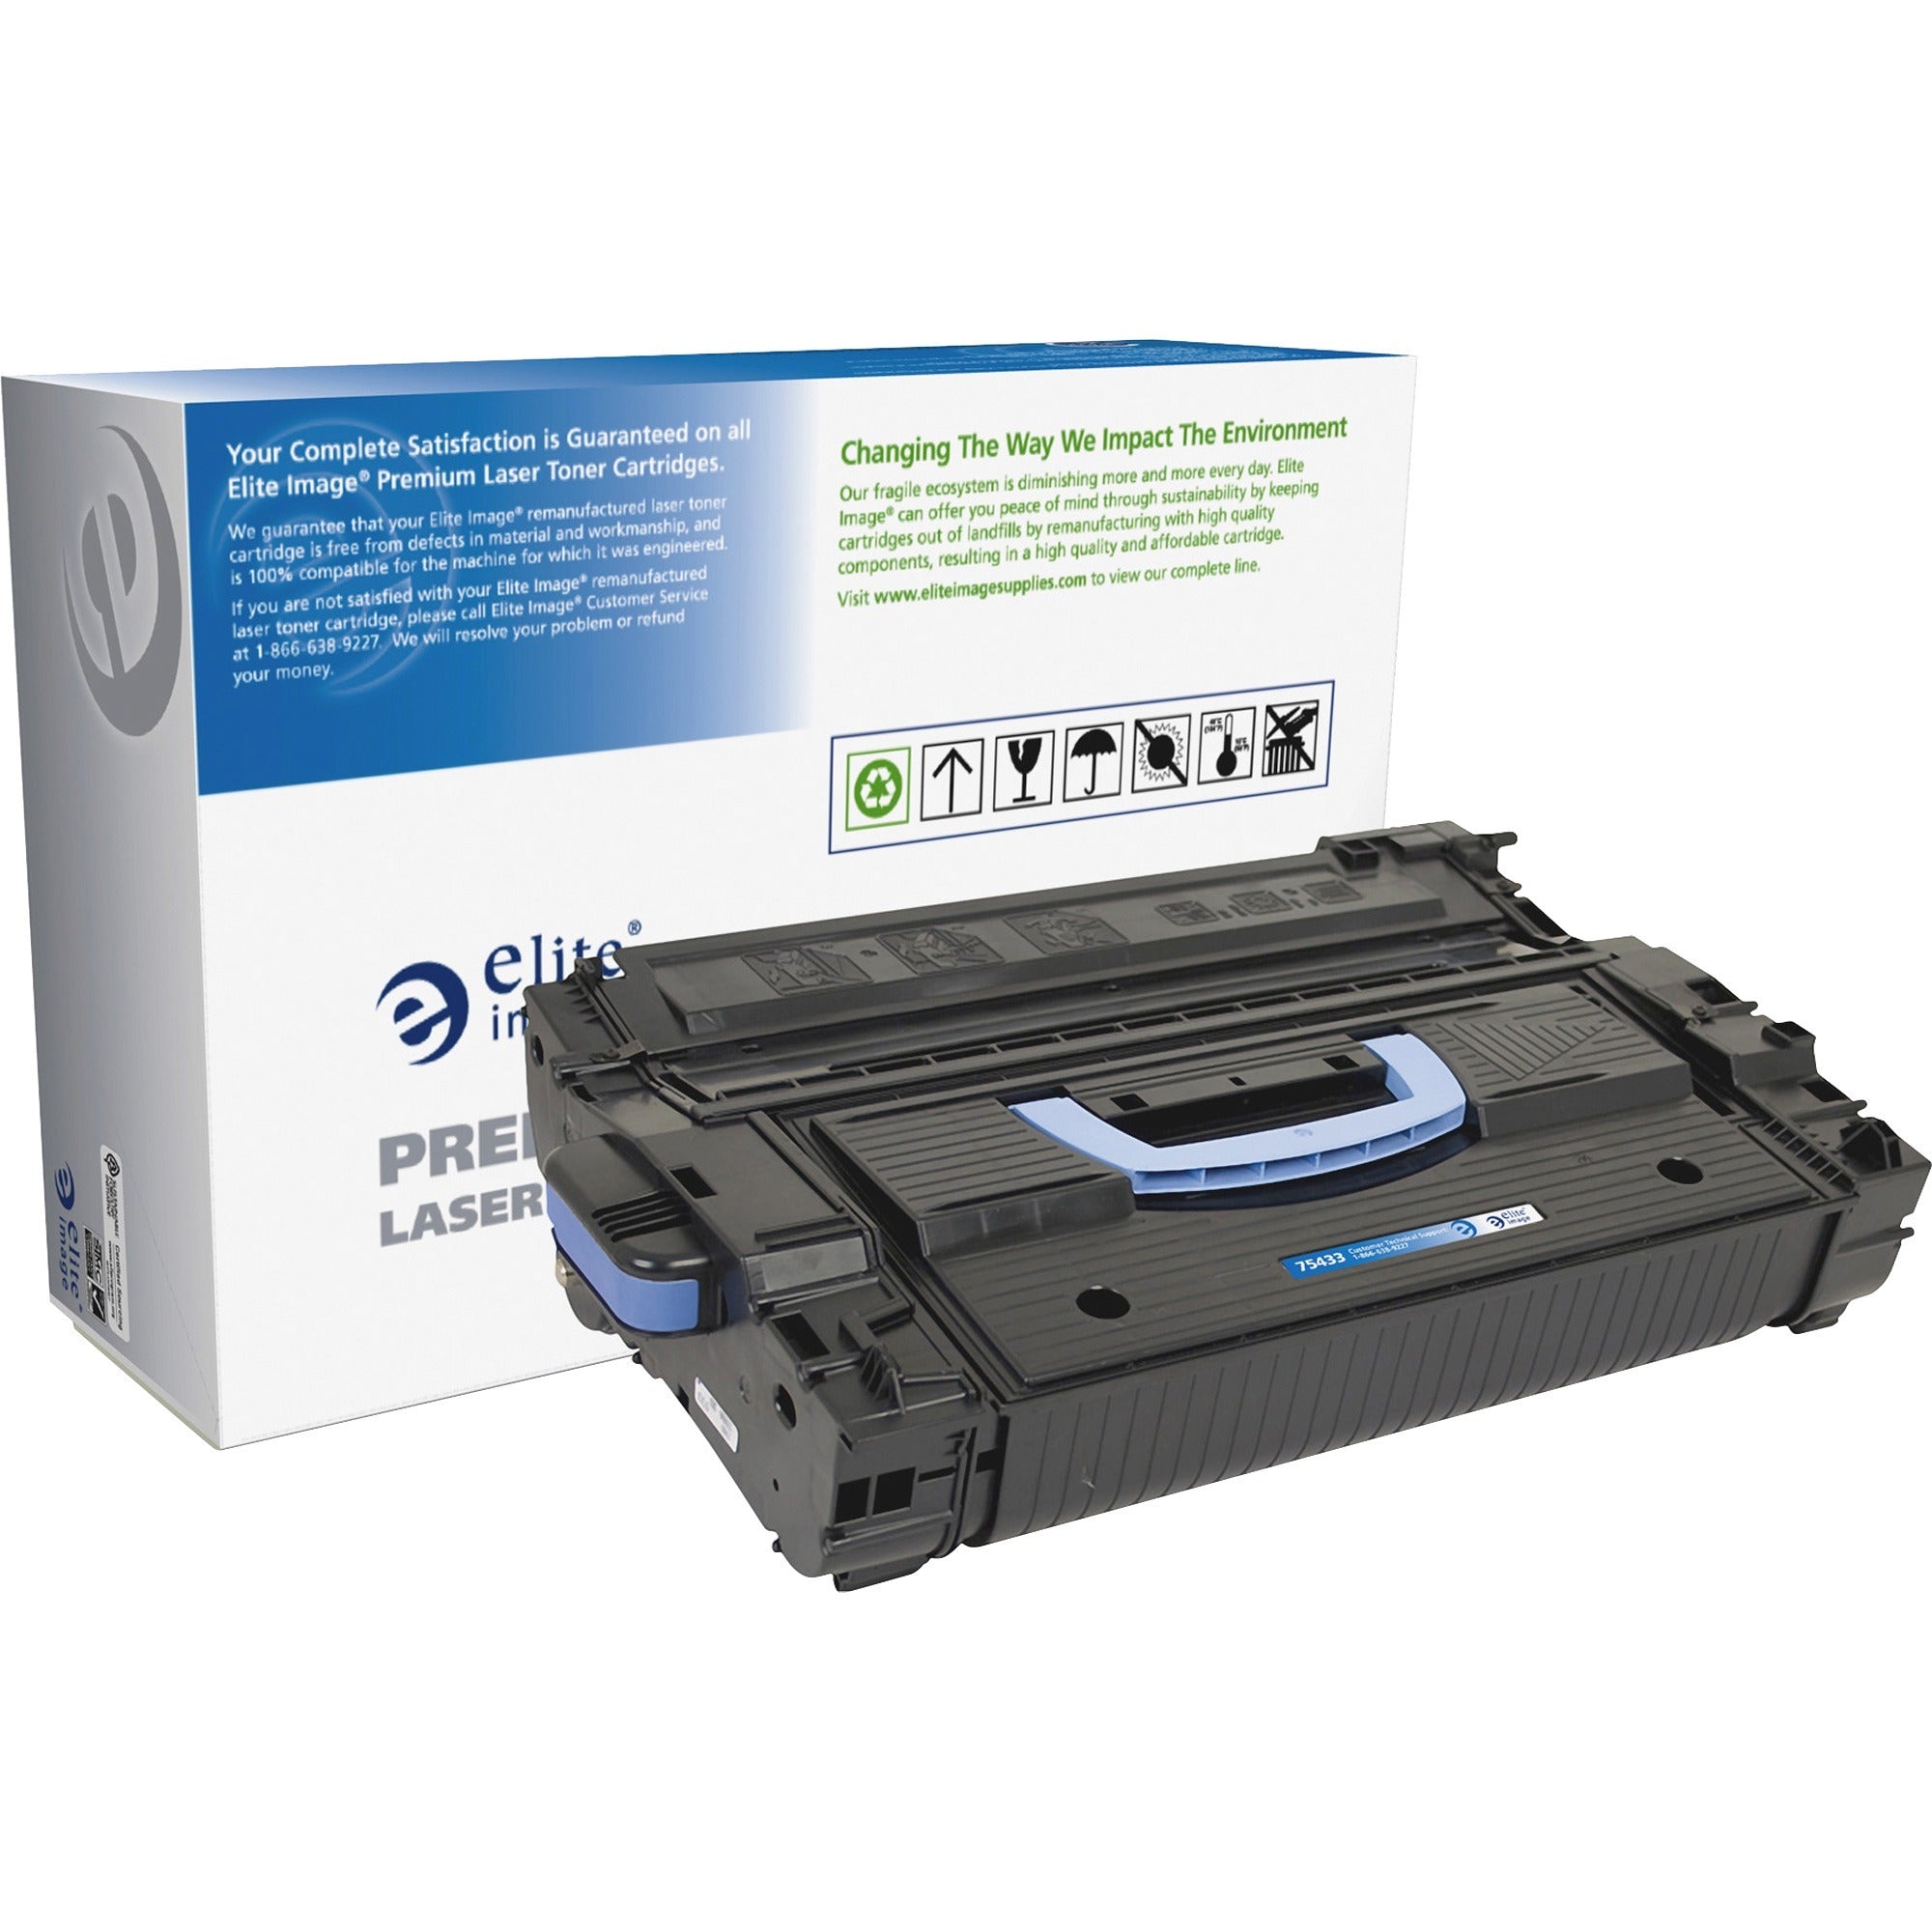 Elite Image Remanufactured MICR Laser Toner Cartridge - Alternative for HP 43X (C8543X) - Black - 1 Each - 30000 Pages - 